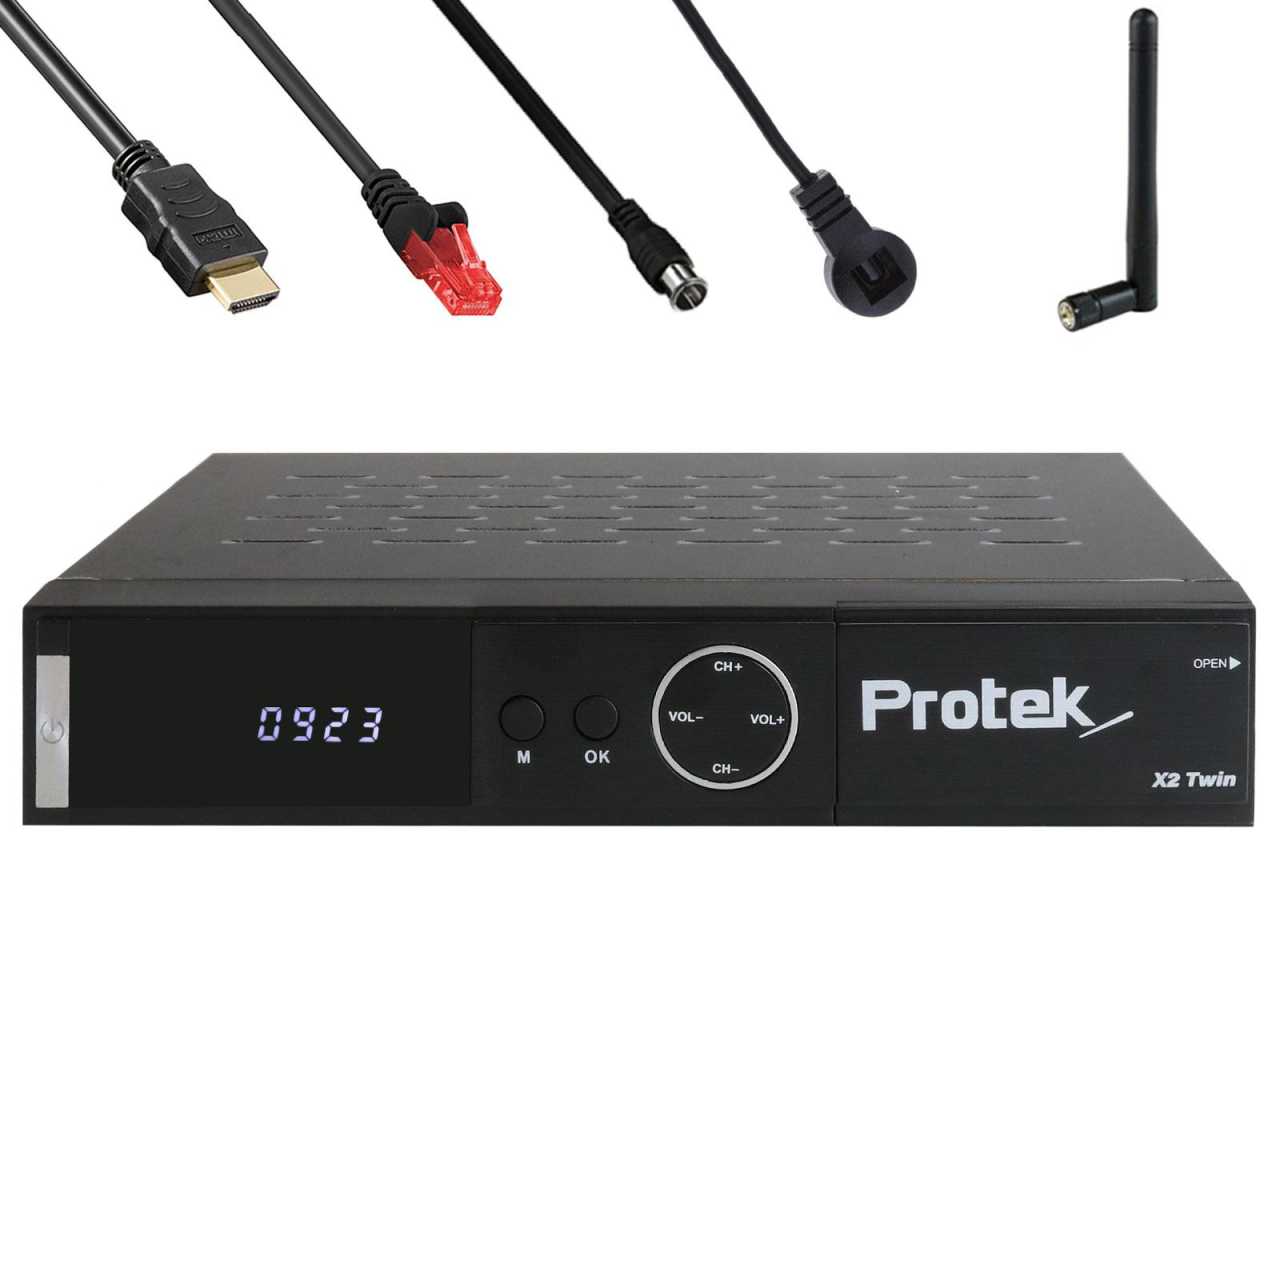 Protek X2 Twin-Sat-Receiver 4K UHD H.265 E2 Linux 2.4 GHz WiFi 2x DVB-S2 inkl. Koax- & Netzwerkkabel von Protek